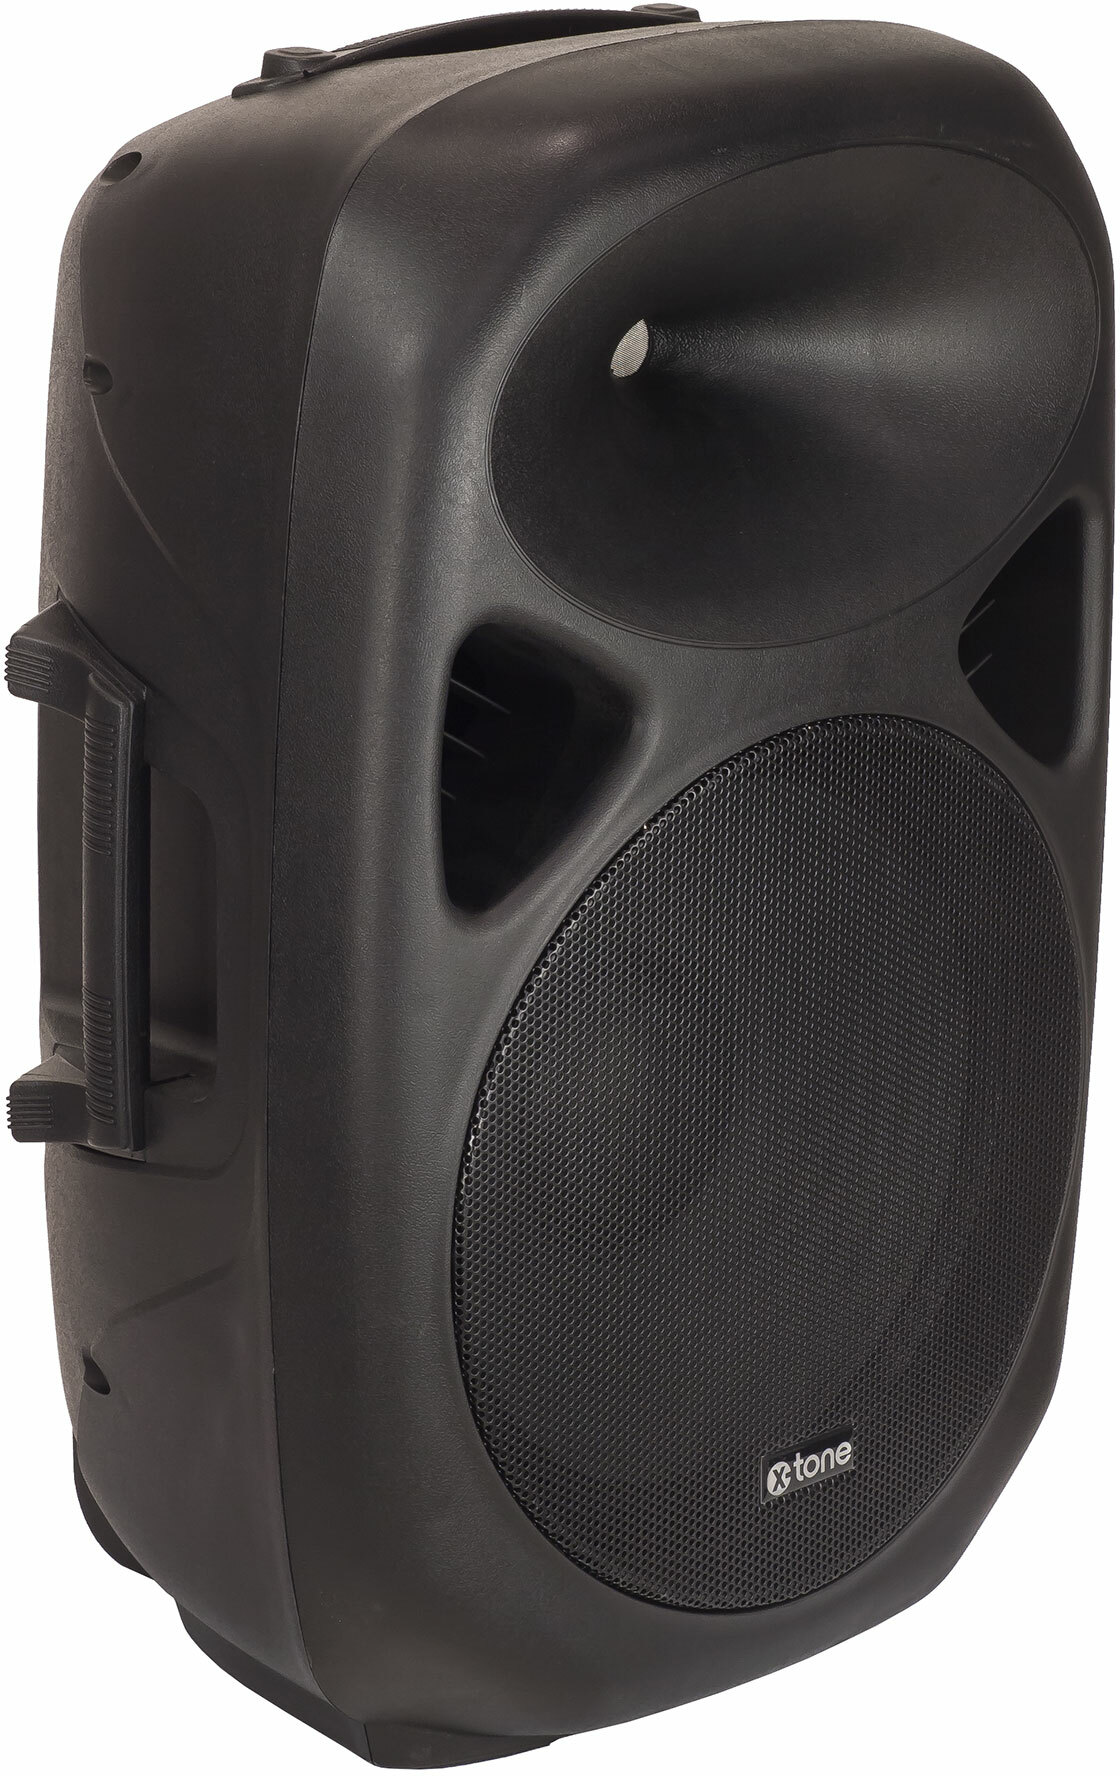 X-tone Sma-15 - Active full-range speaker - Main picture